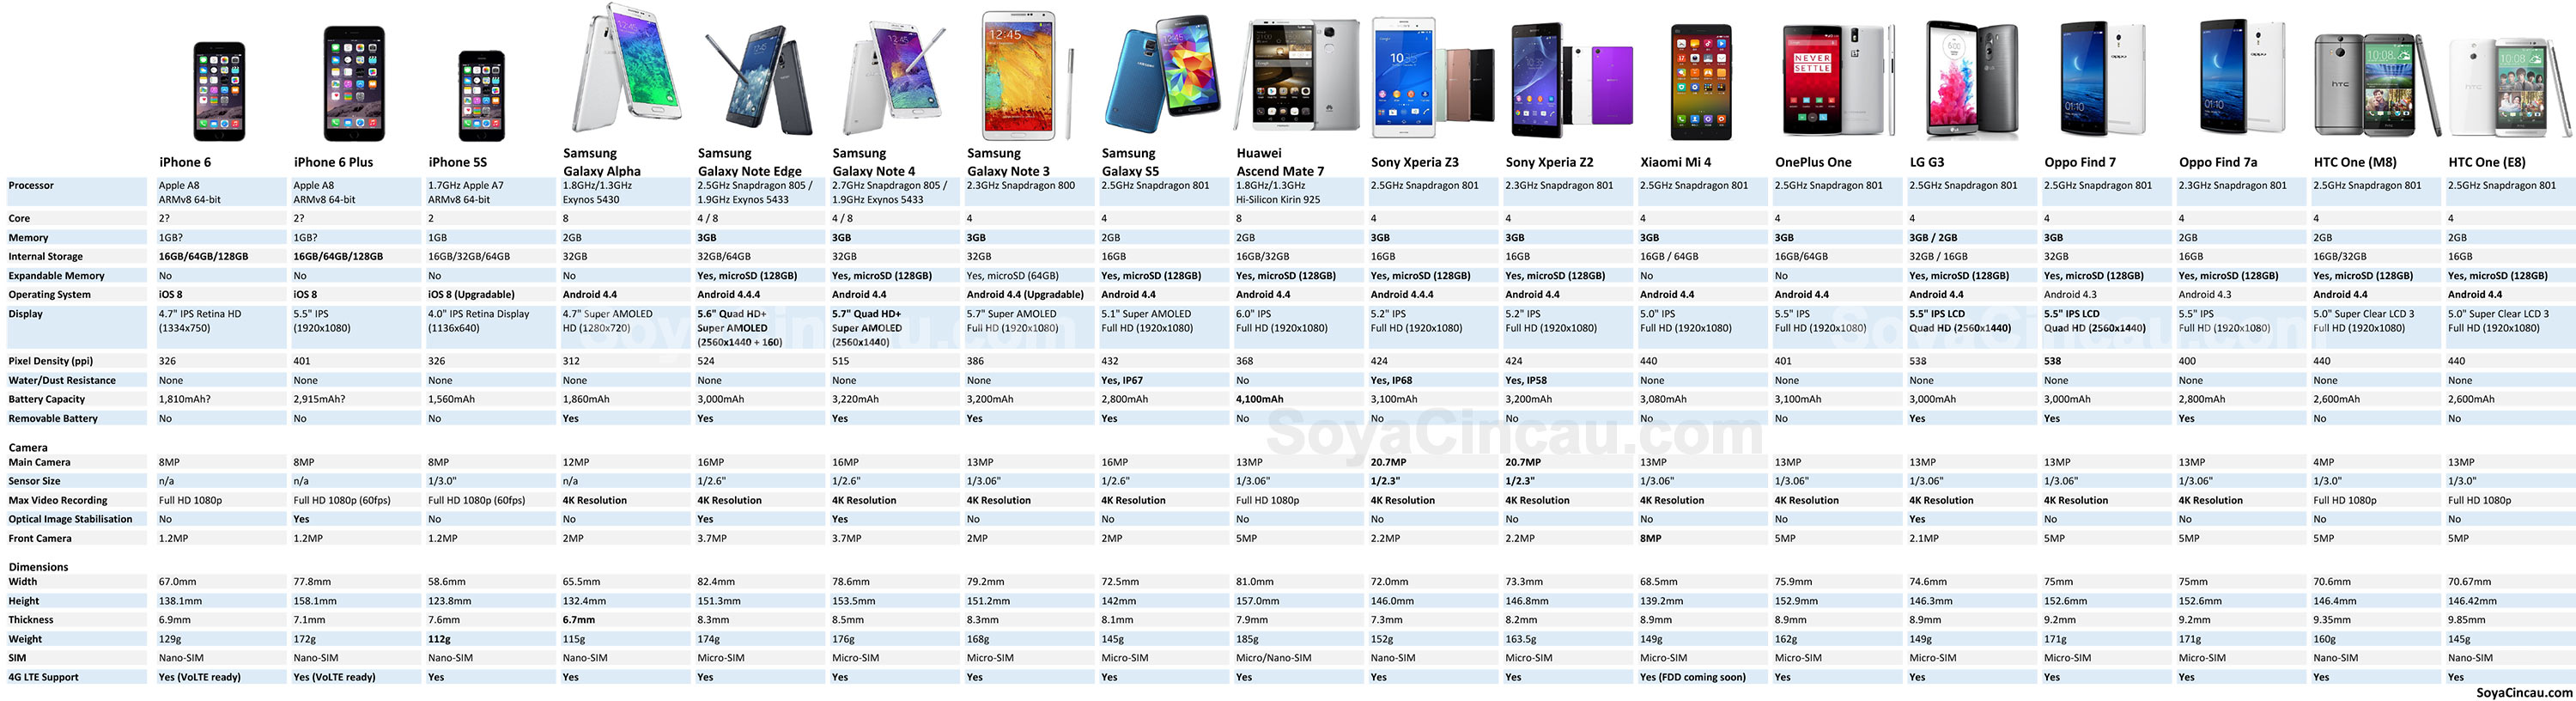 Характеристики Смартфонов Xiaomi В Таблице